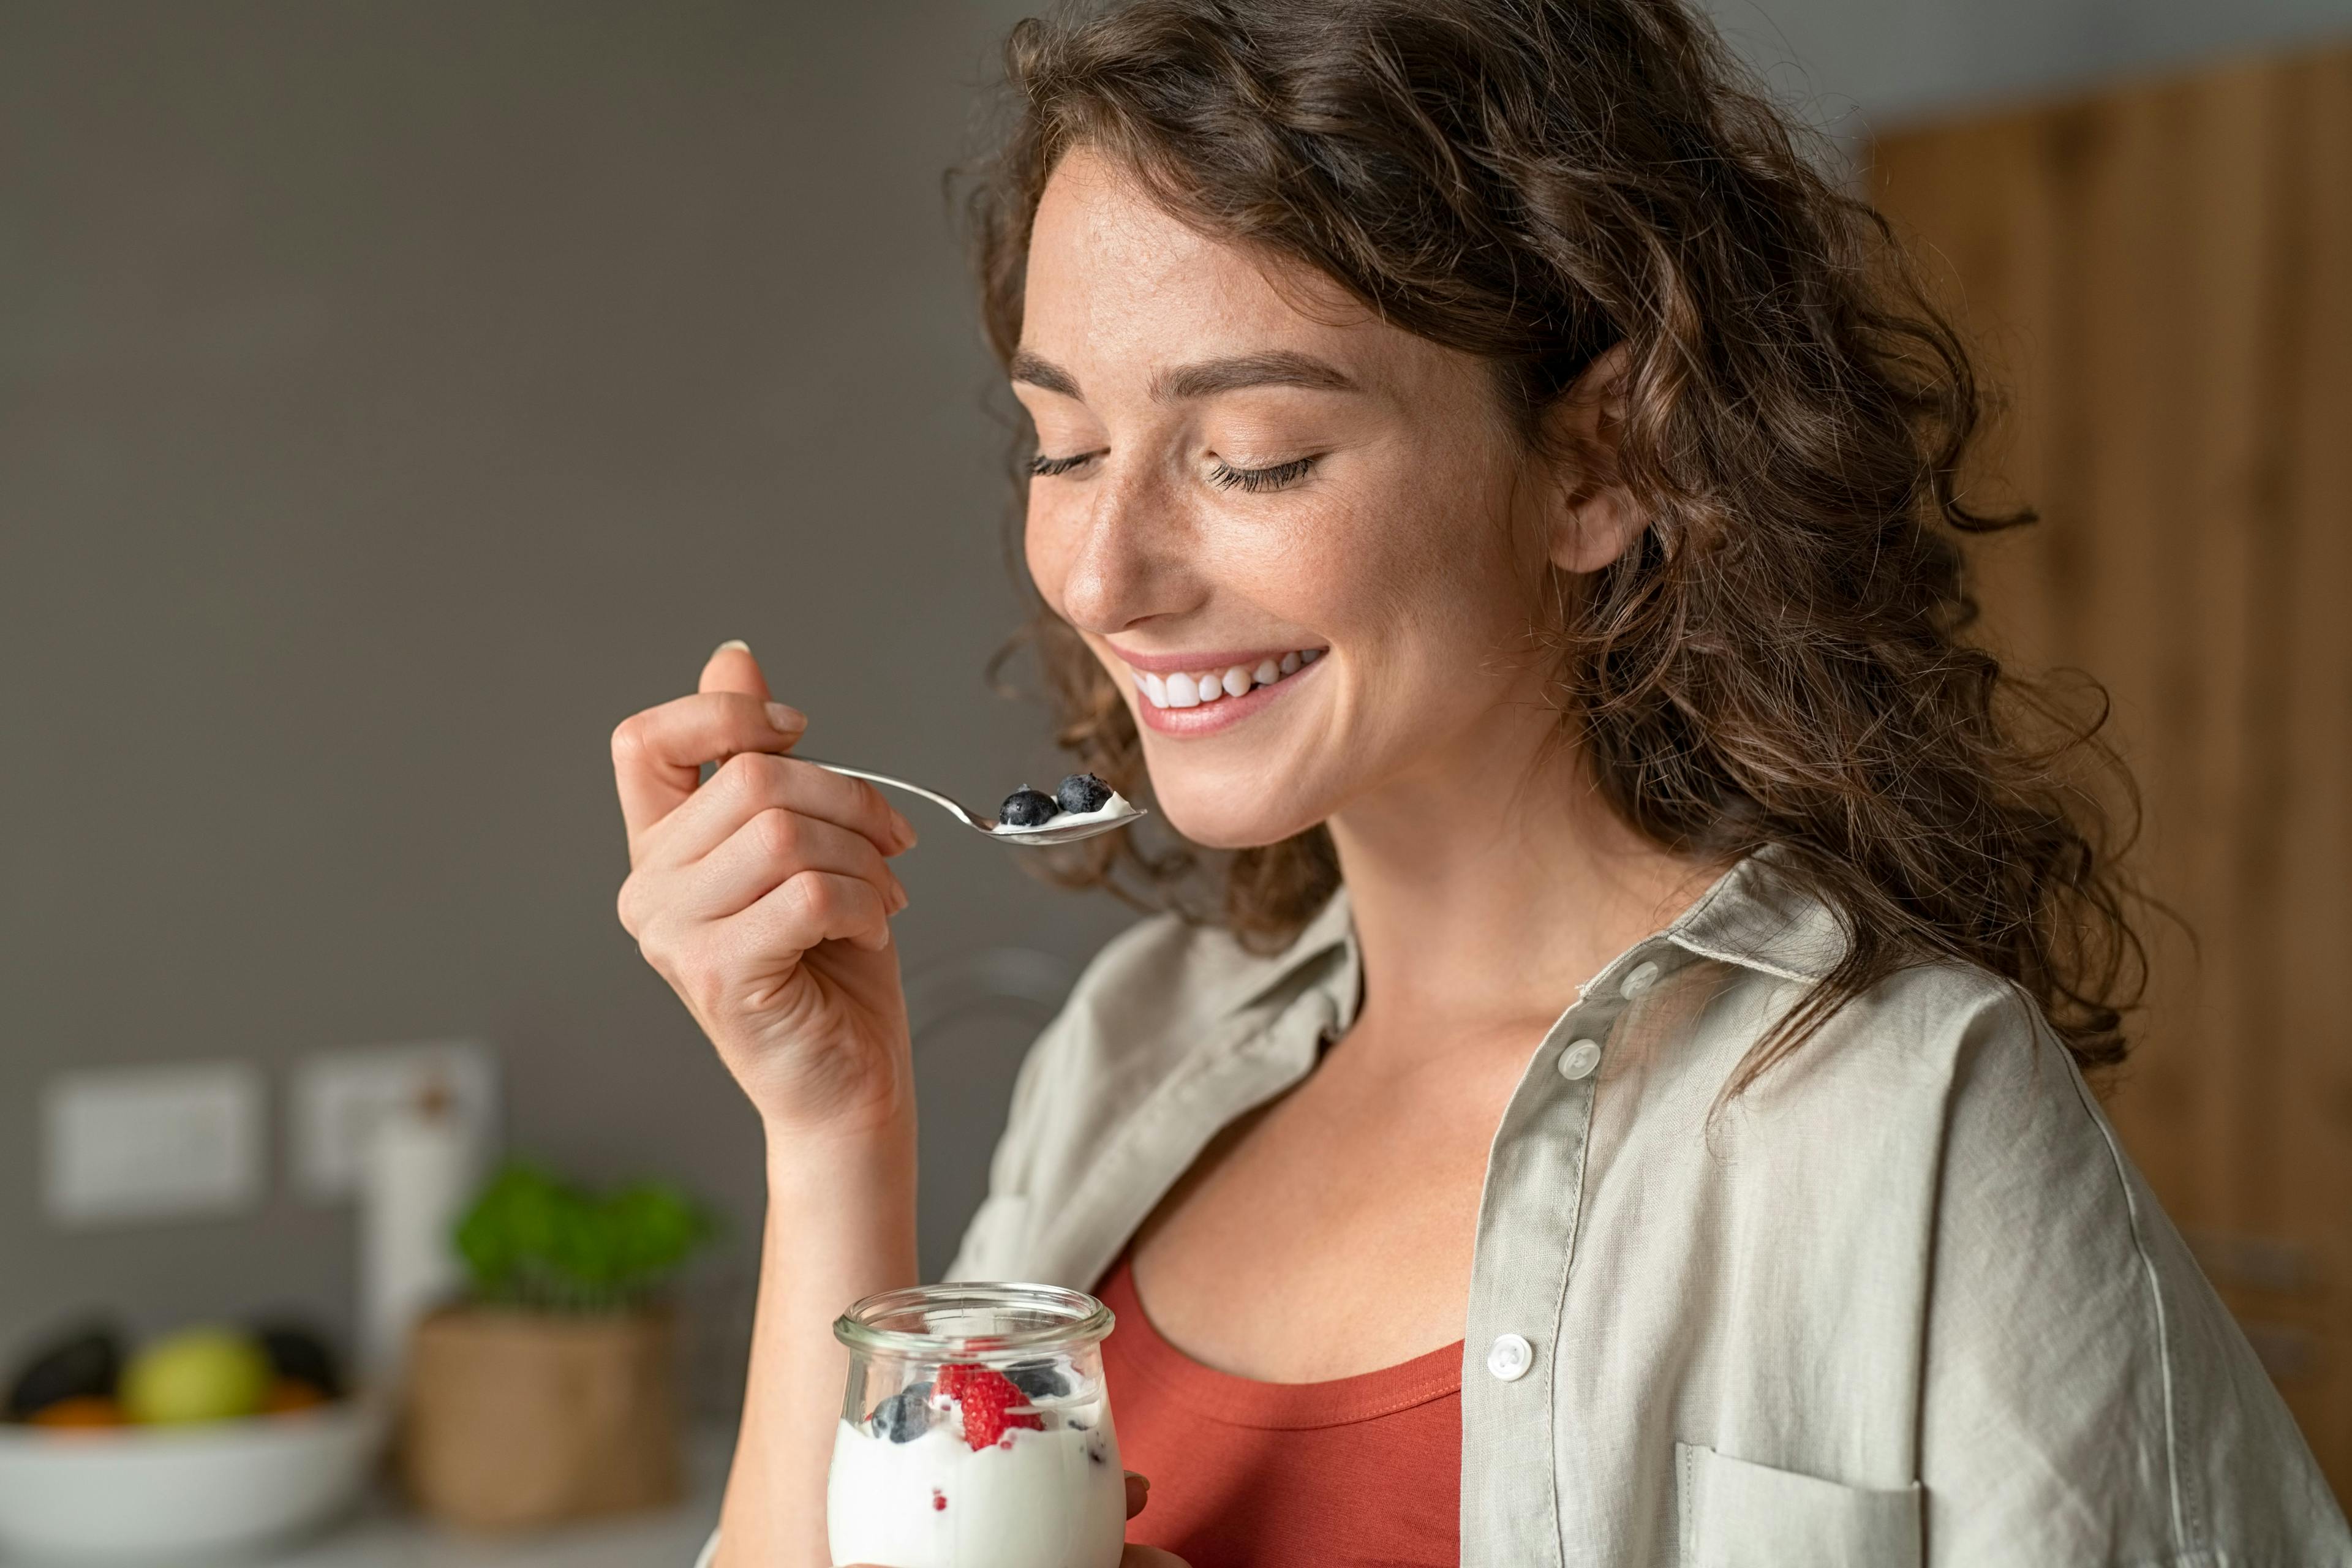 Woman eating yogurt with berries at home | Image Credit: Rido - stock.adobe.com